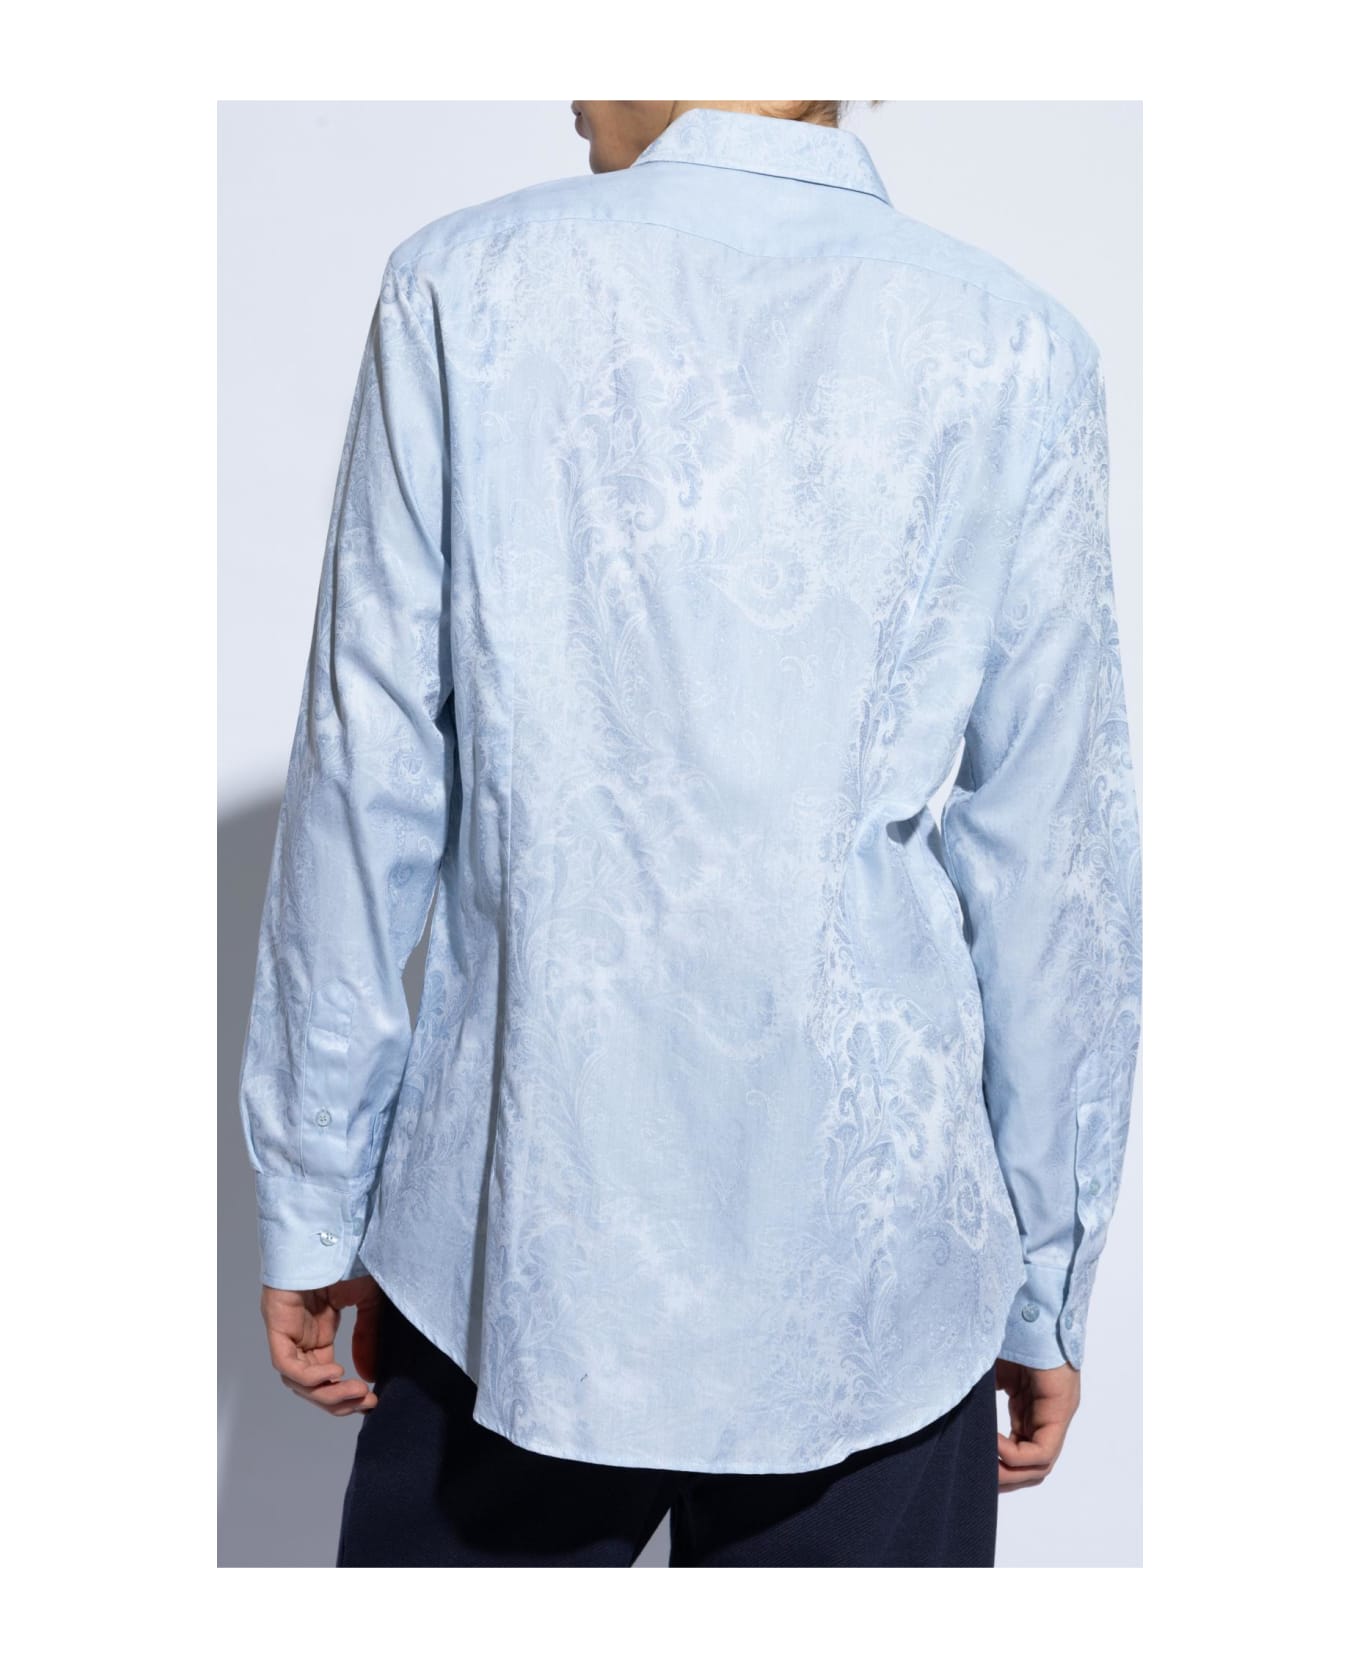 Etro Jacquard Pattern Shirt - Variante abbinata シャツ